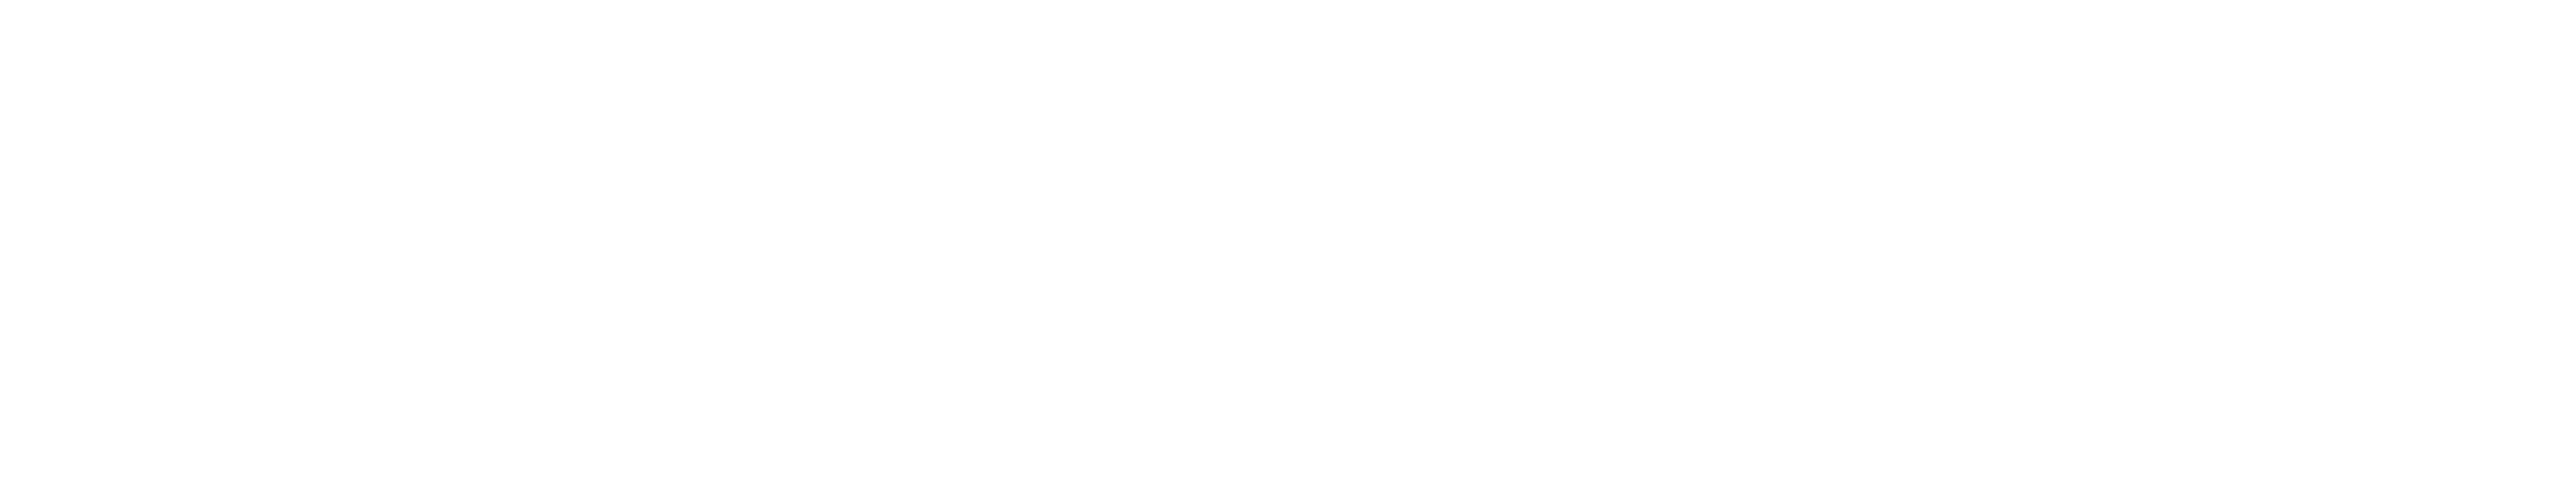 UAB 50th Logo - Shield Only - Black/White Outline